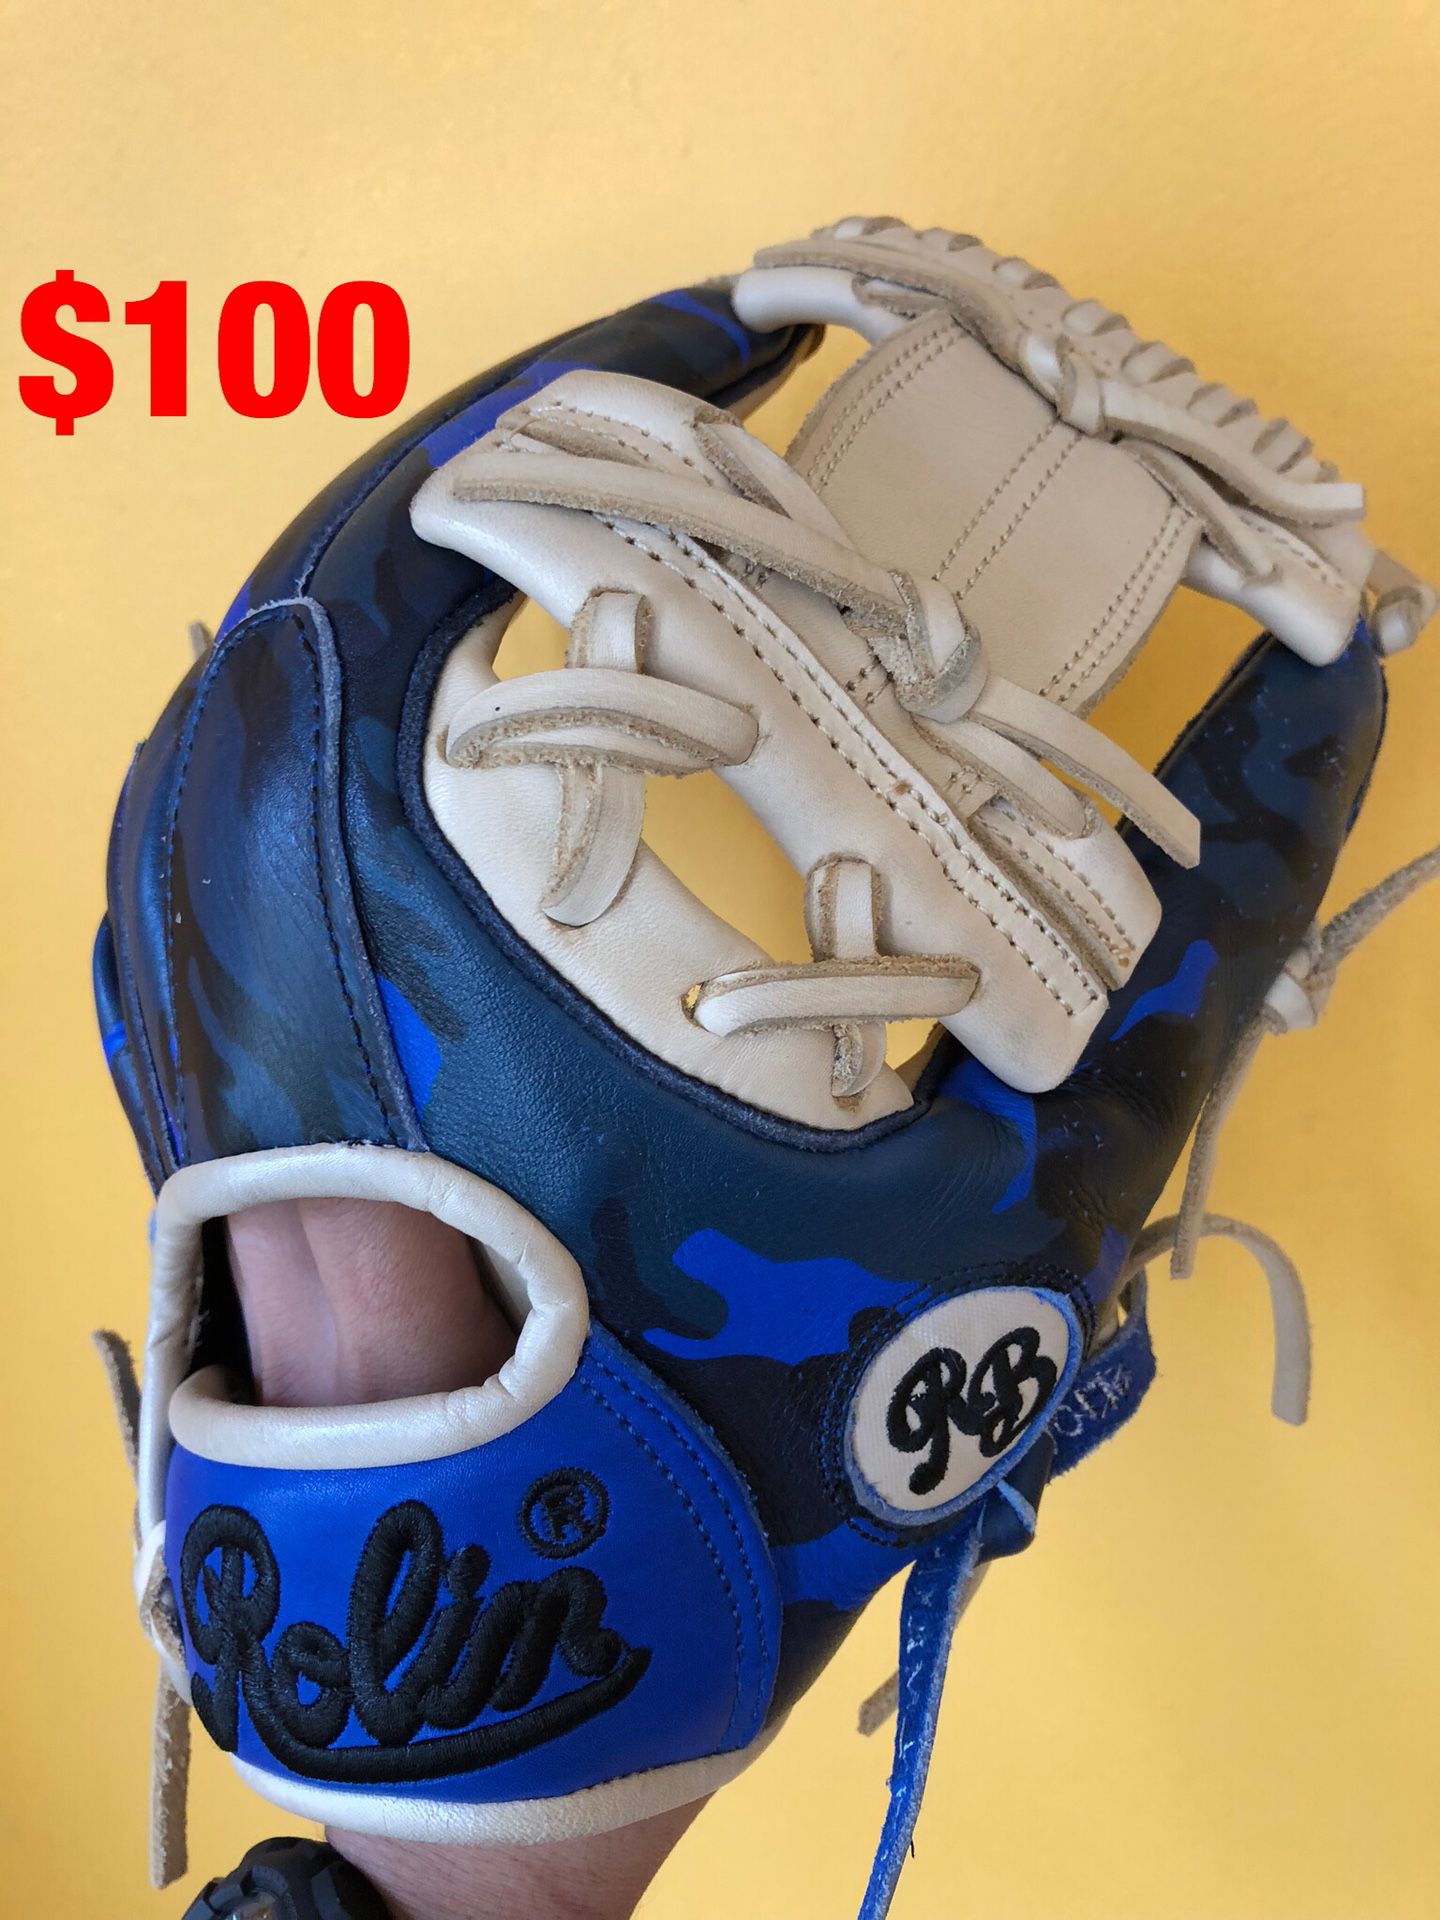 Rolin baseball glove new condition quality pro leather béisbol